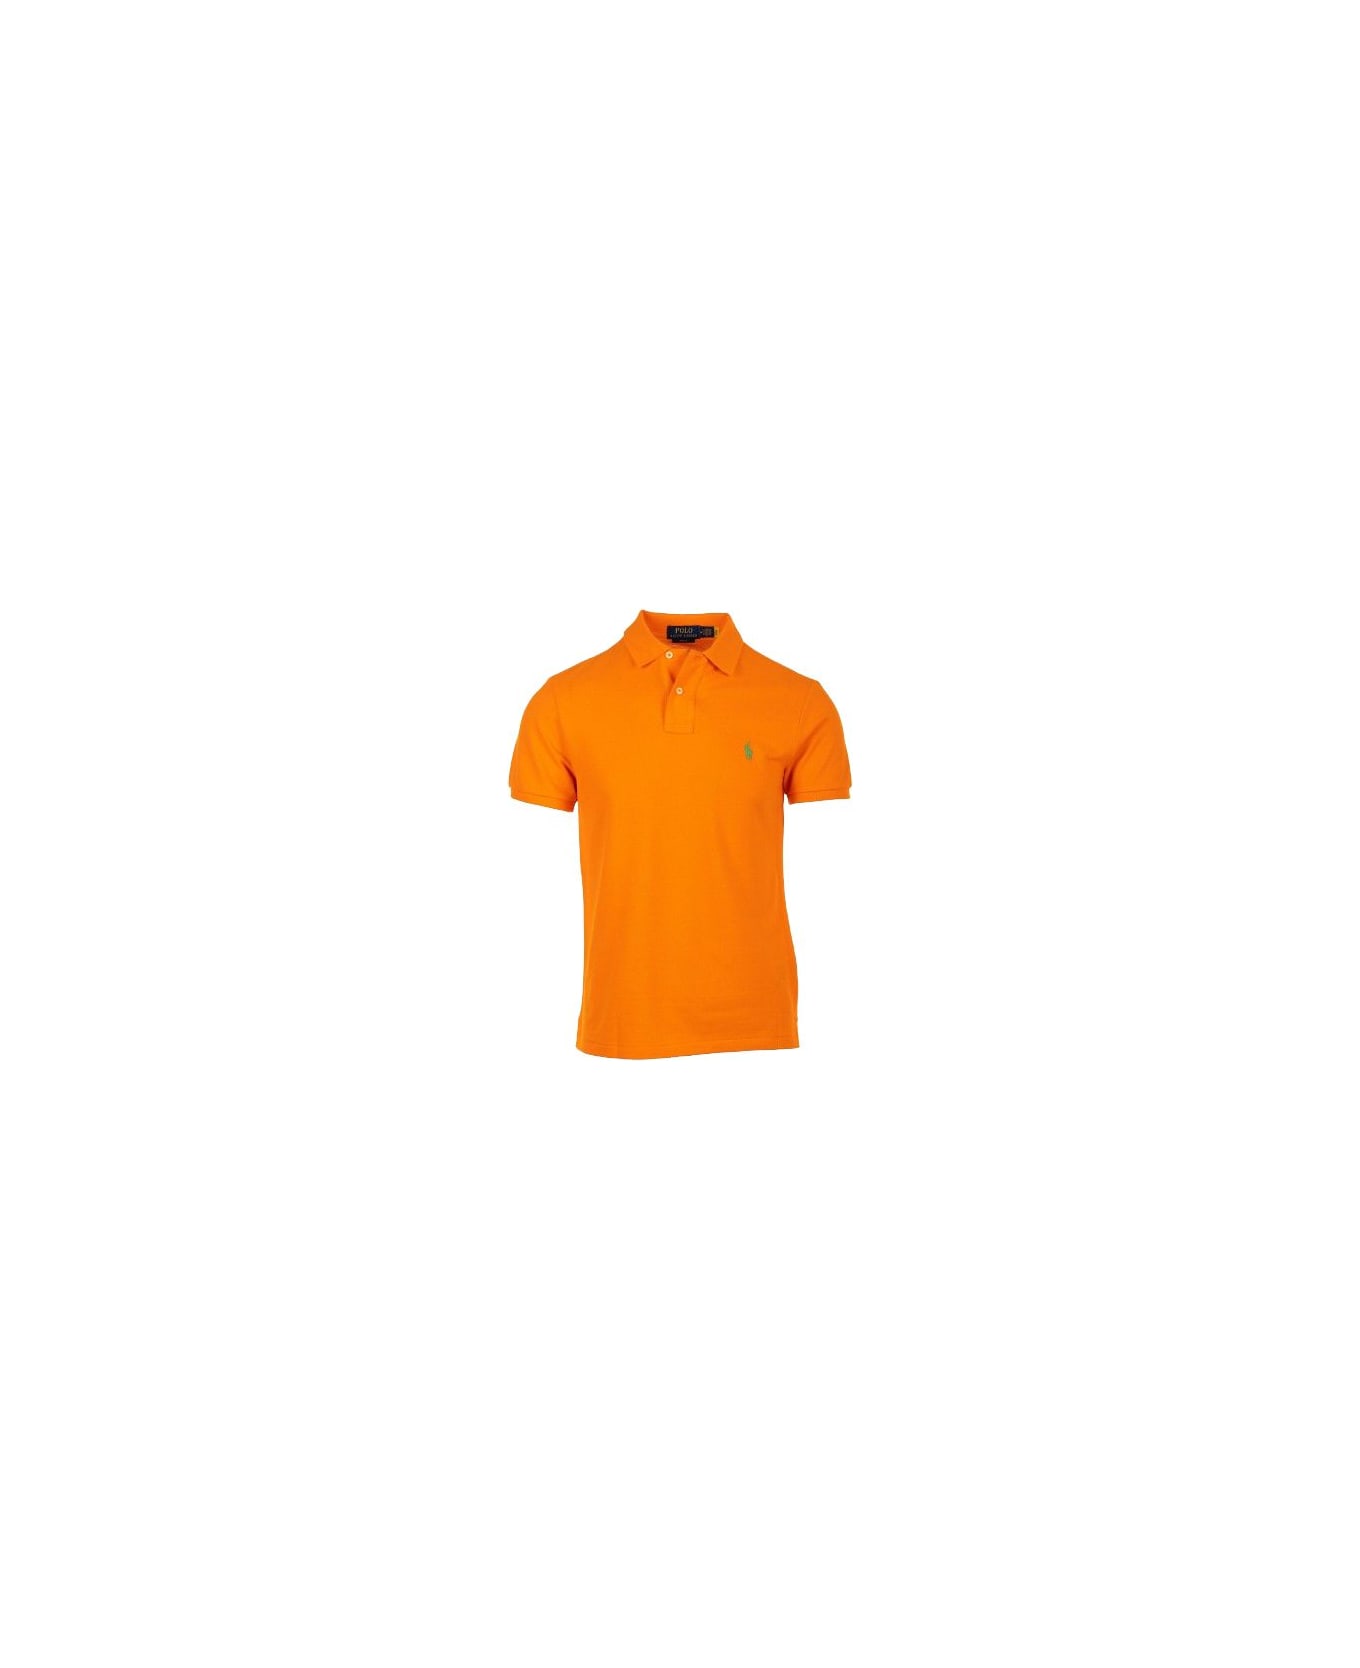 Polo Ralph Lauren Polo Shirt - Orange